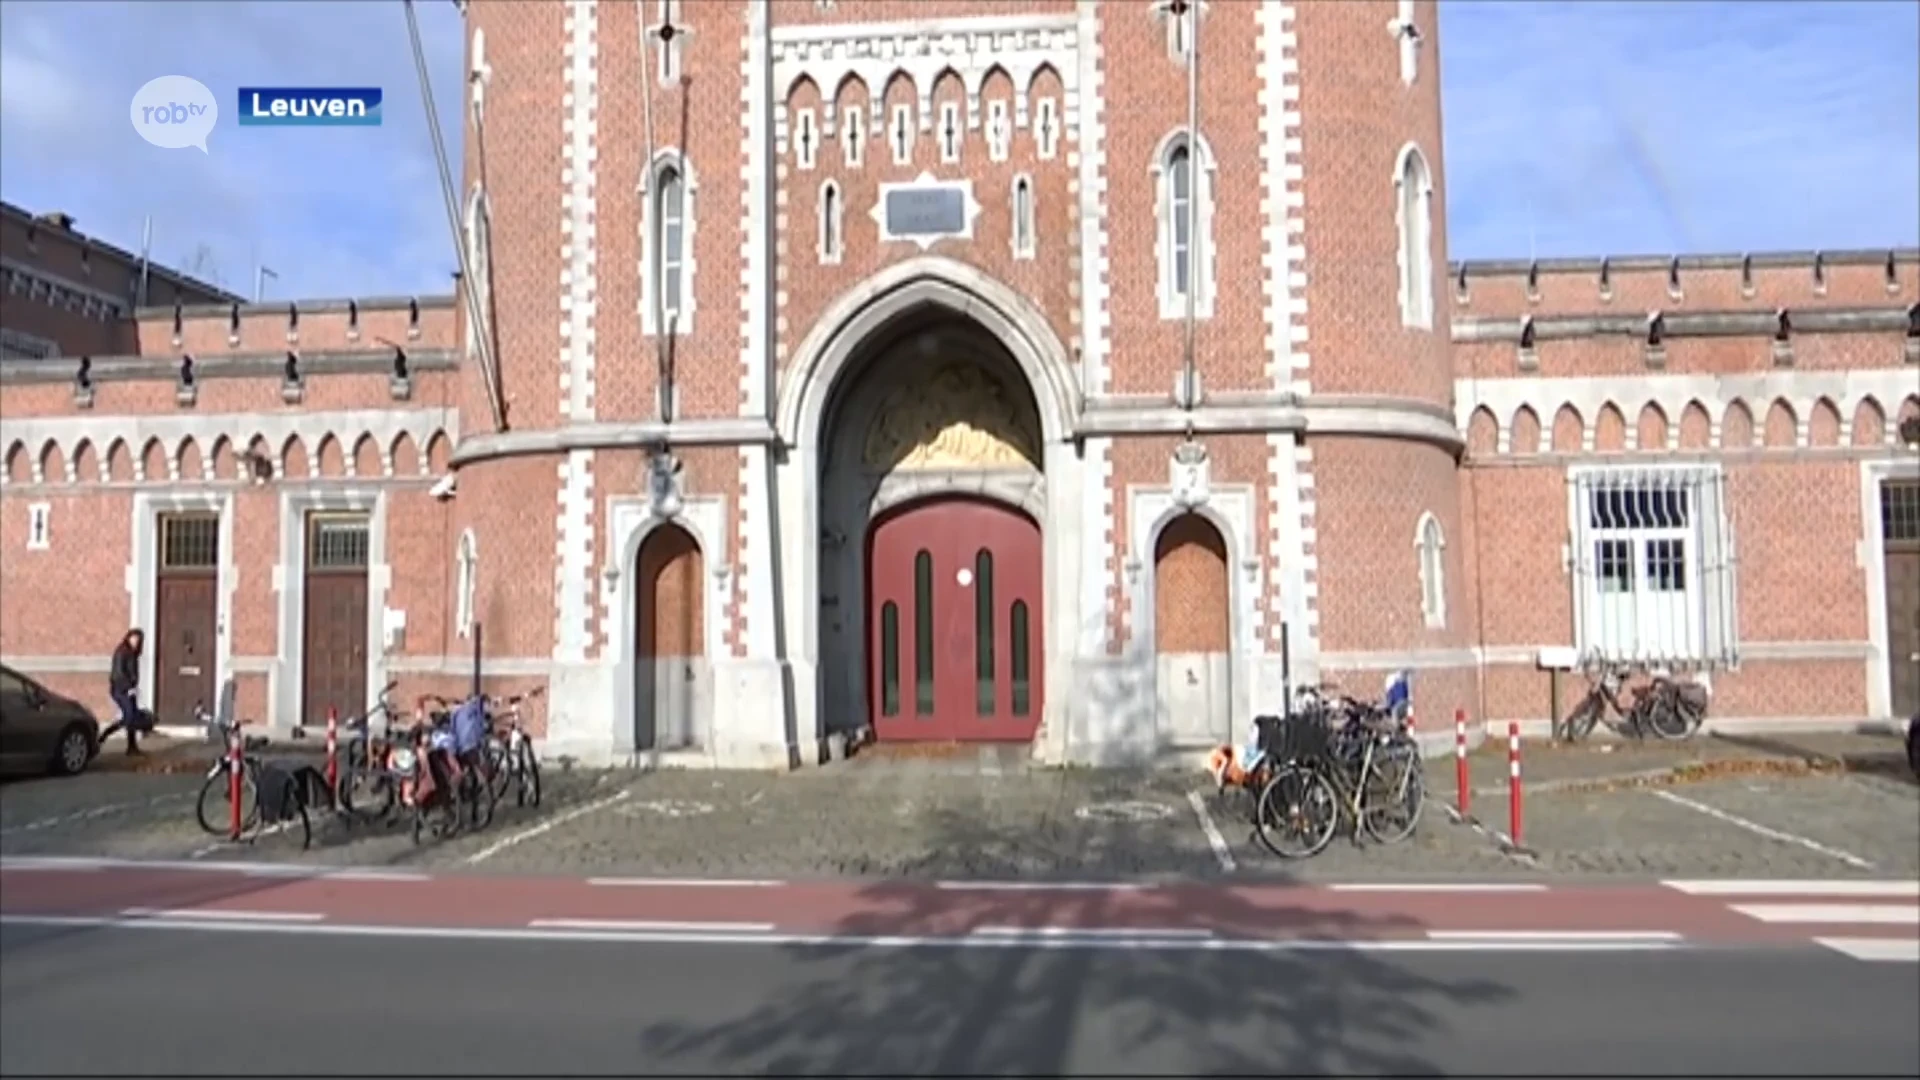 Gevangenisvleugel Leuven-Centraal in lockdown